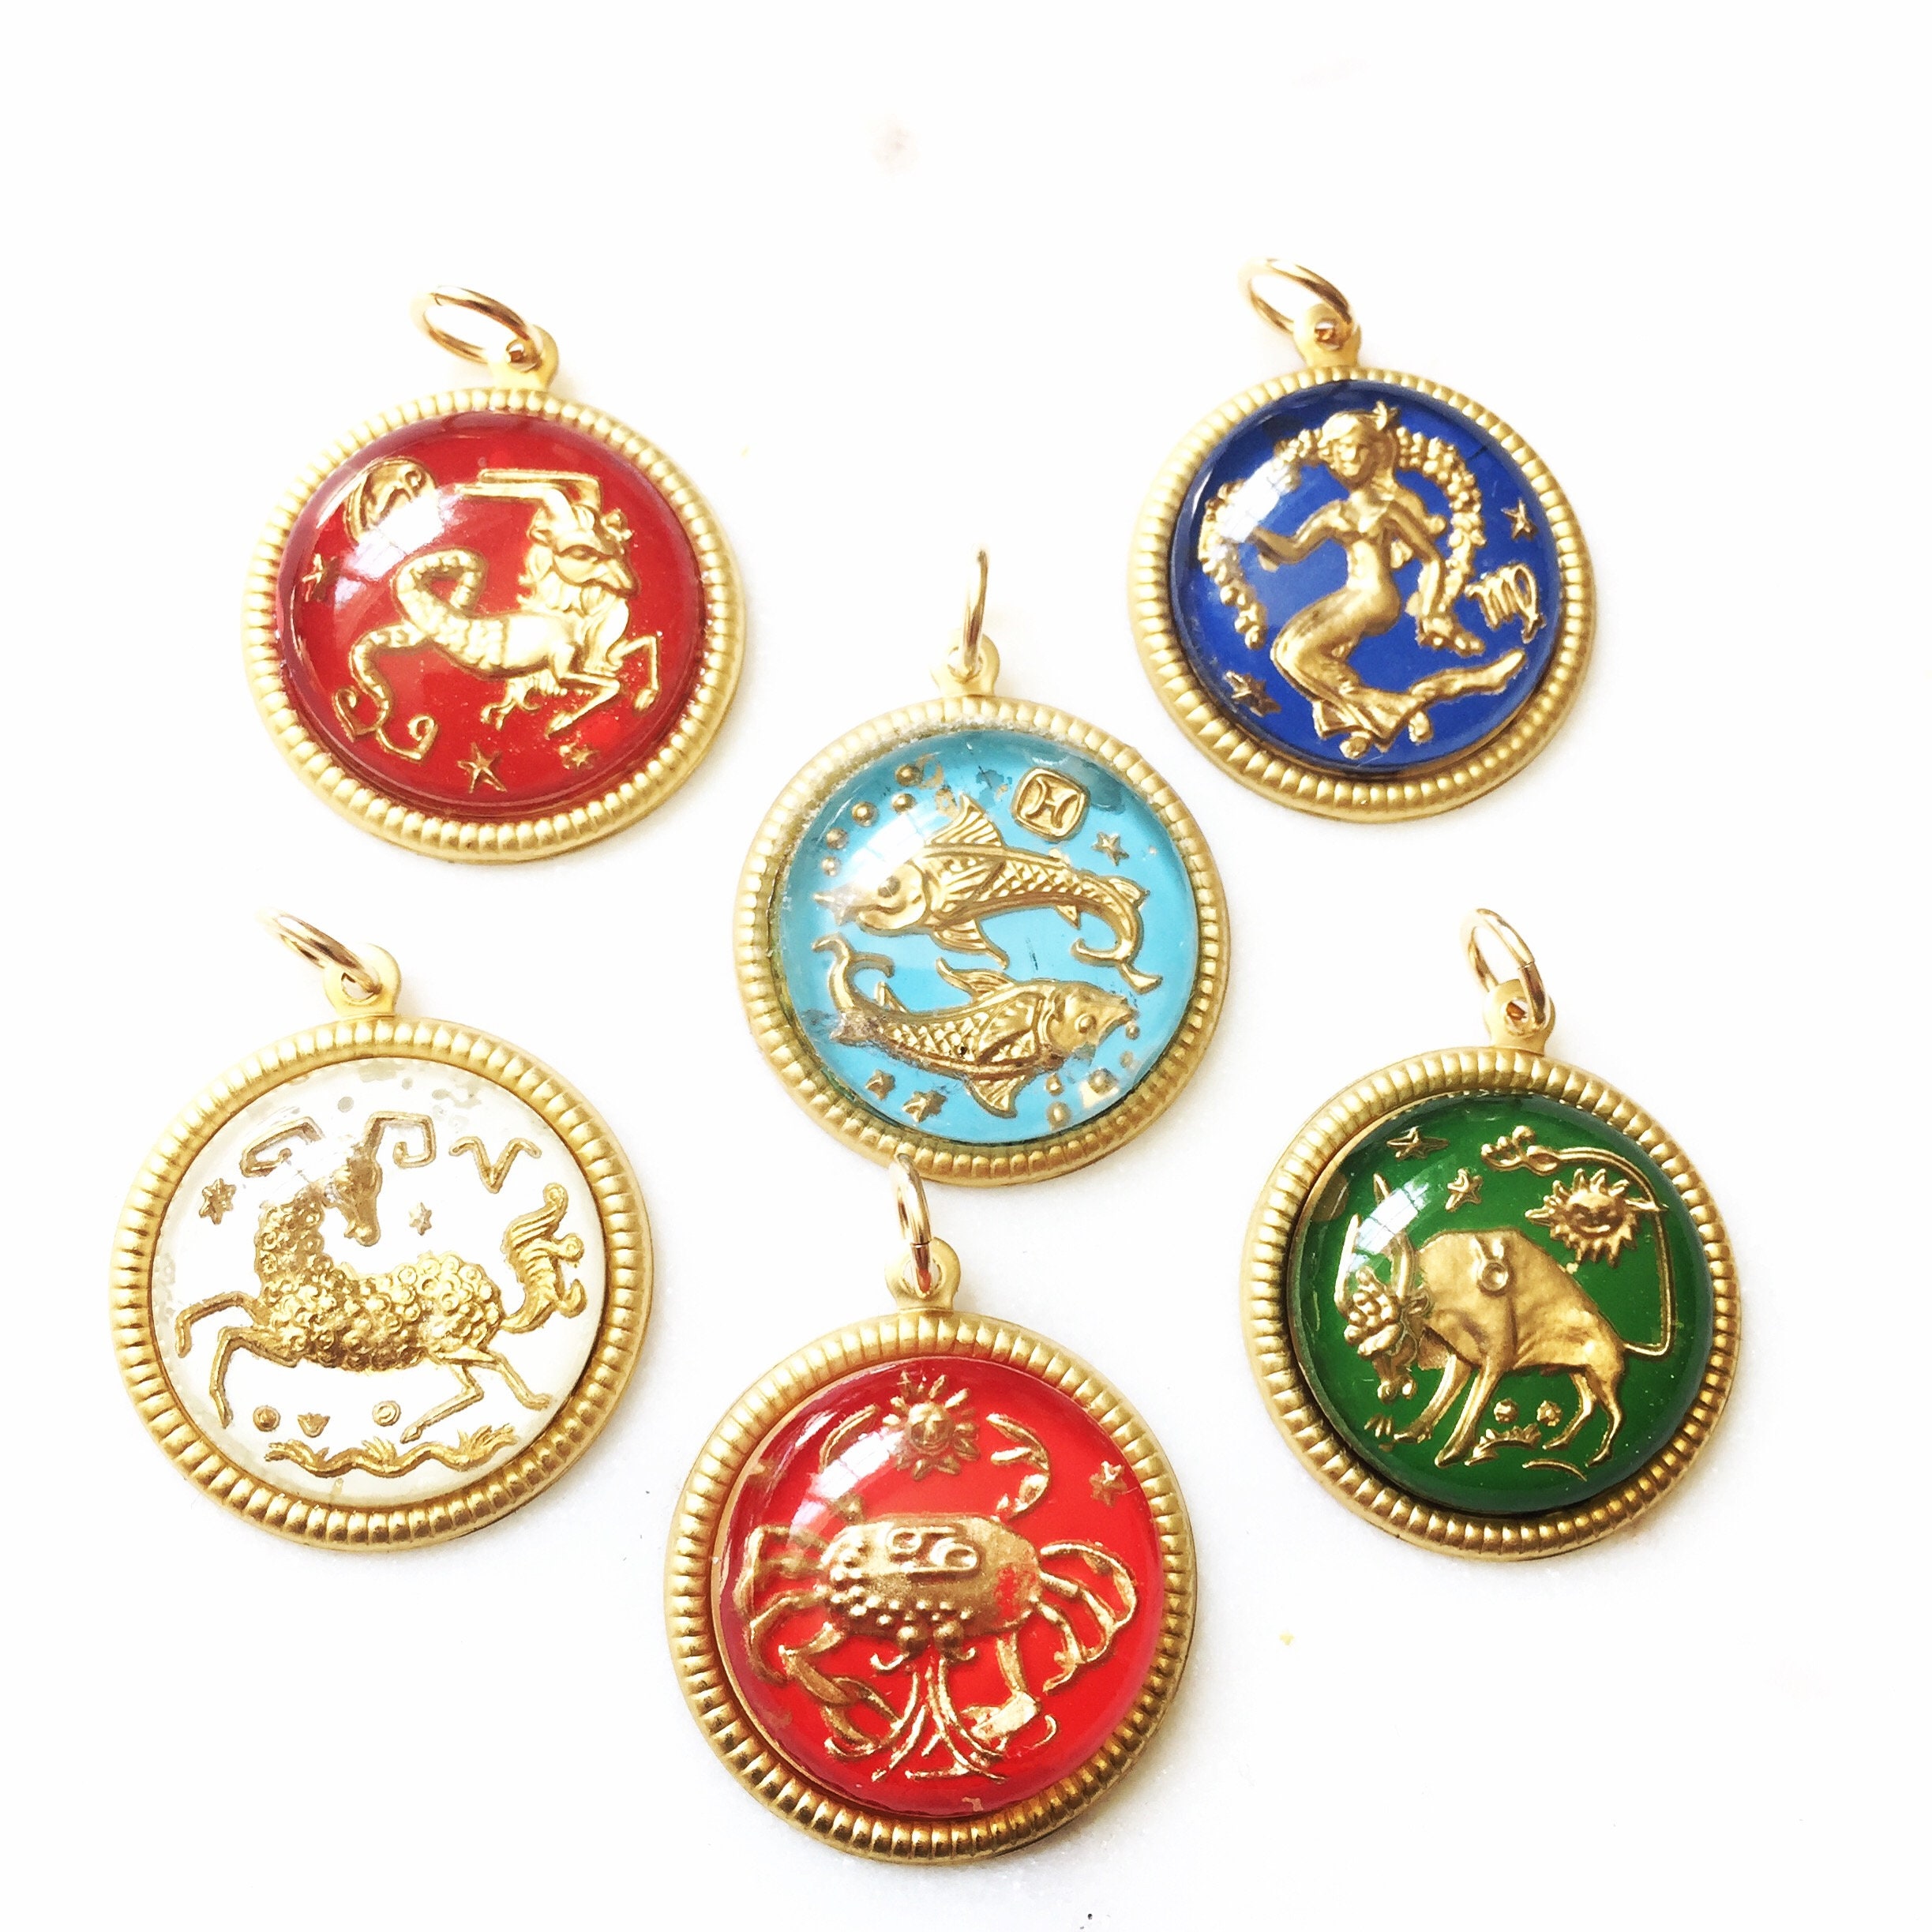 The Original Zodiac Tarot Necklace 18K Gold Filled / Tarot Card Necklace / Zodiac Pendant Necklace / Astrology Zodiac Sign Necklace